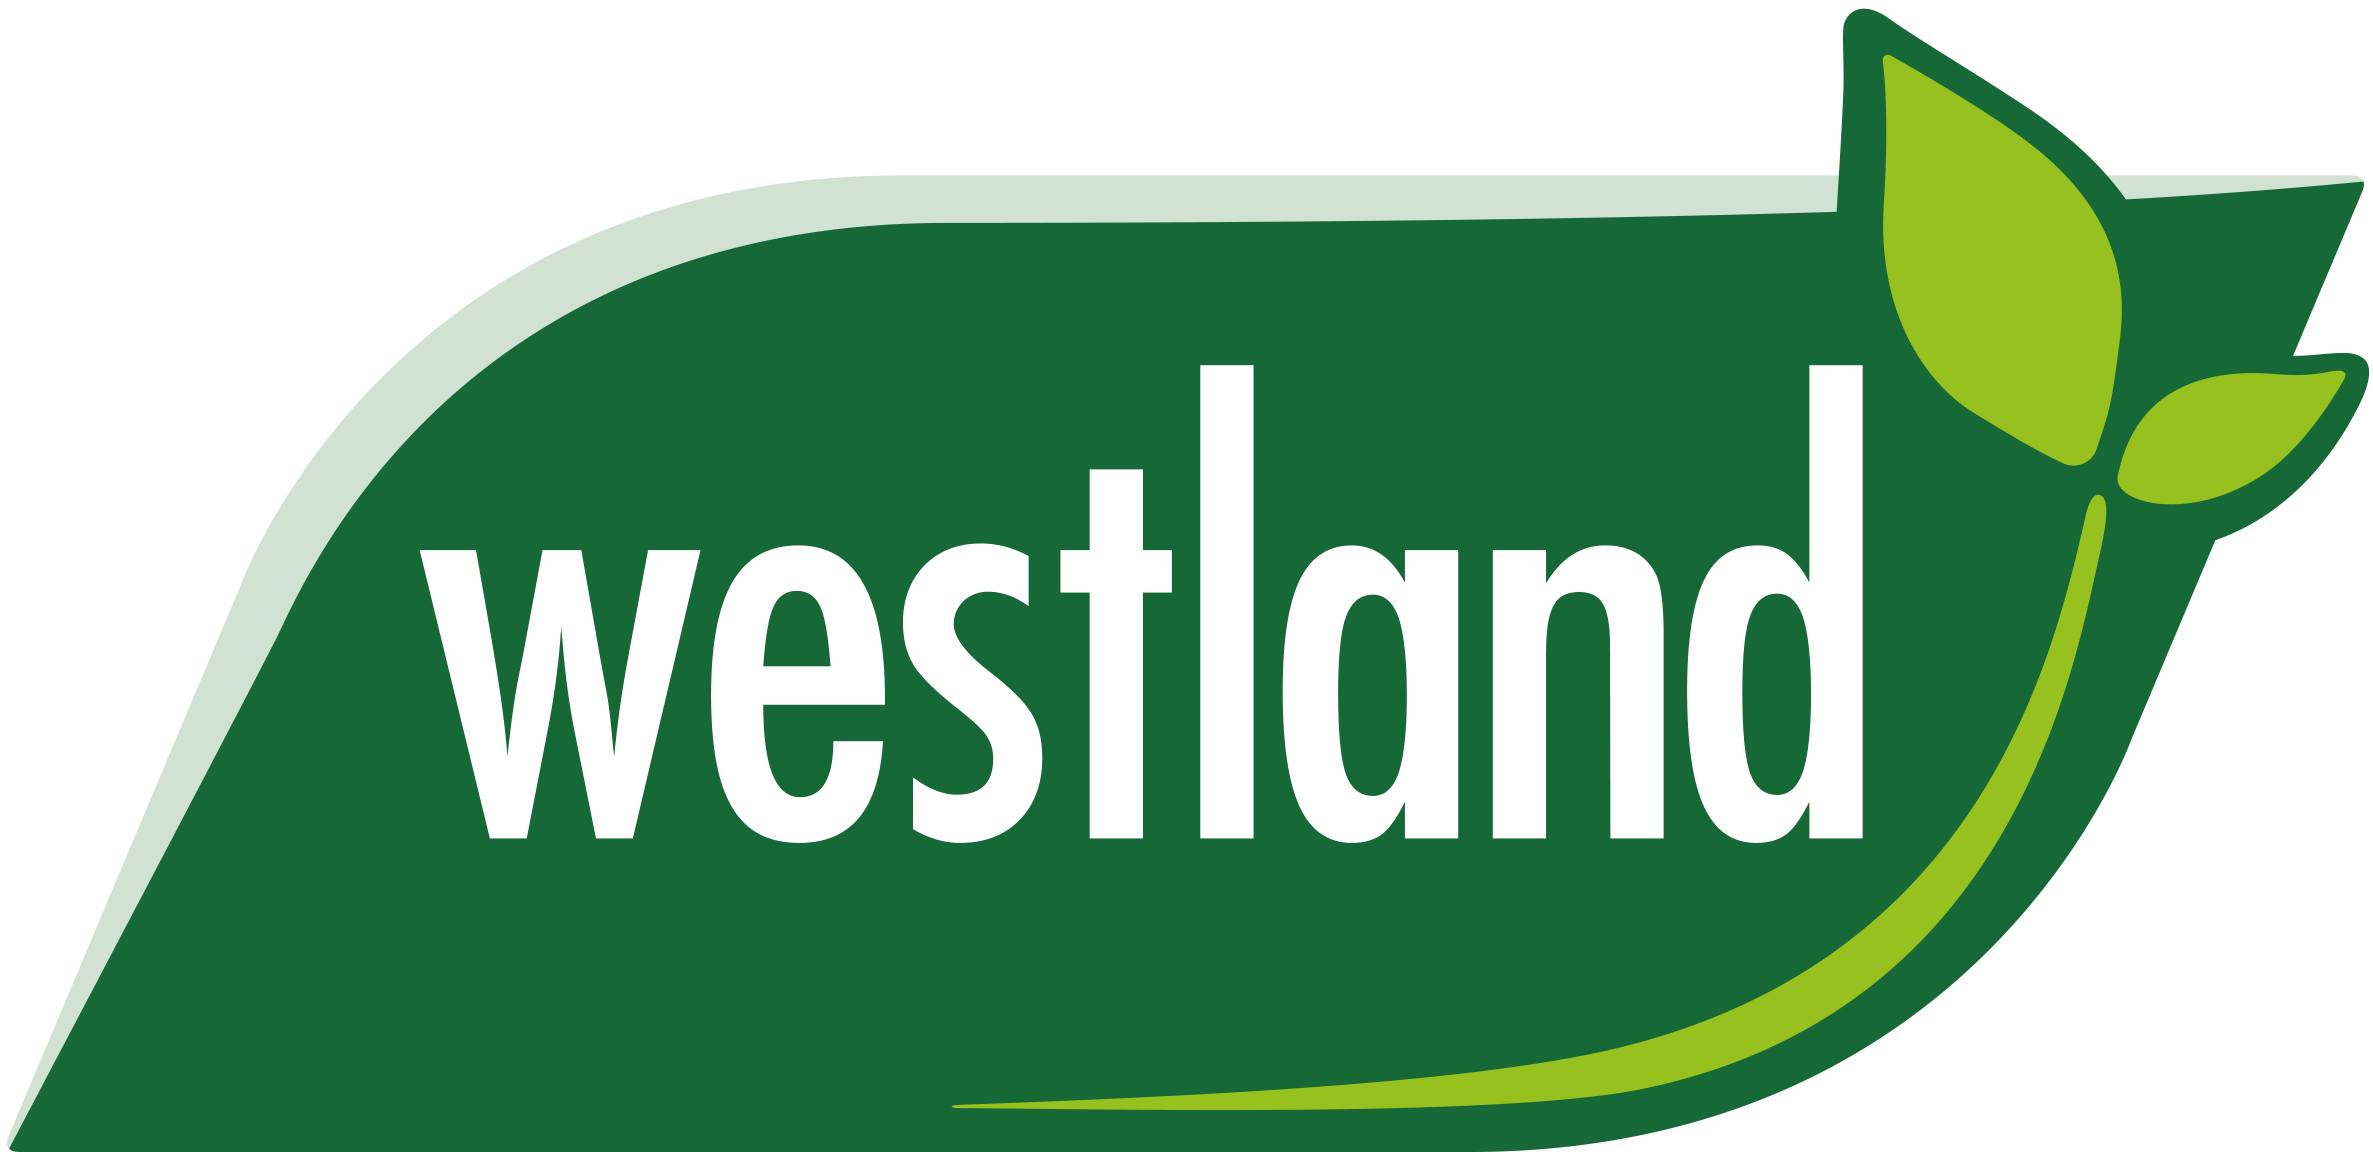 Westland_logo_PNG1